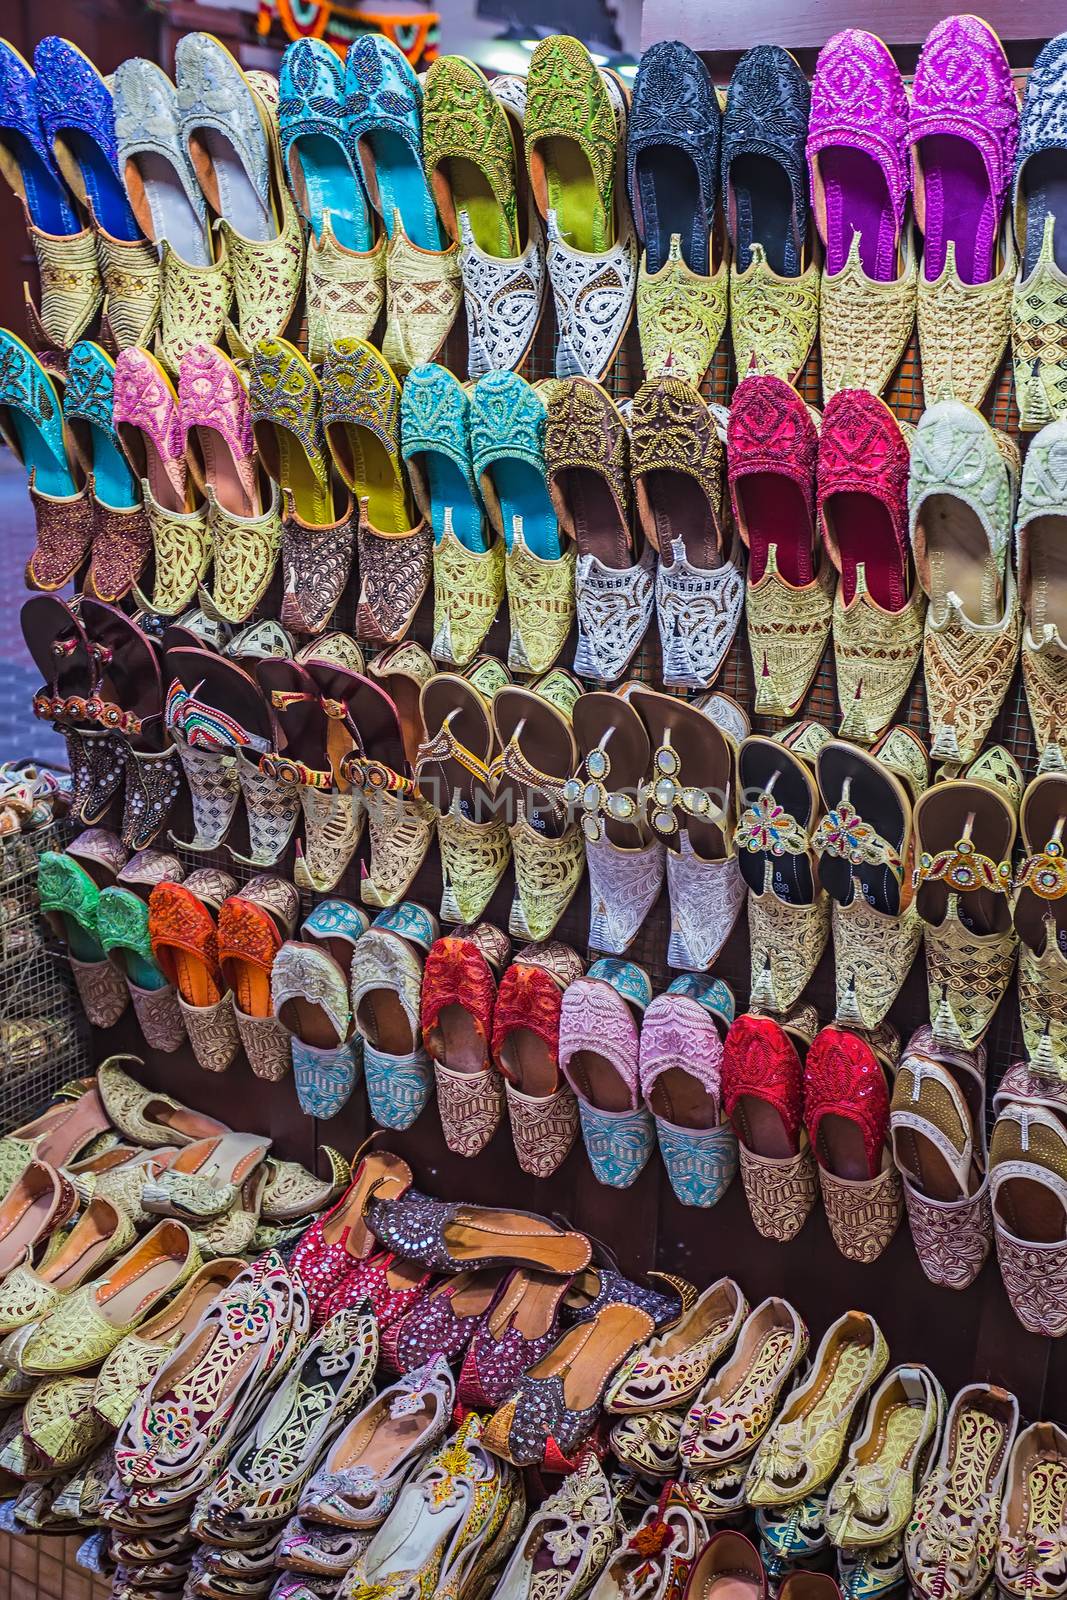 colorful shoes in souk Dubai by oleg_zhukov